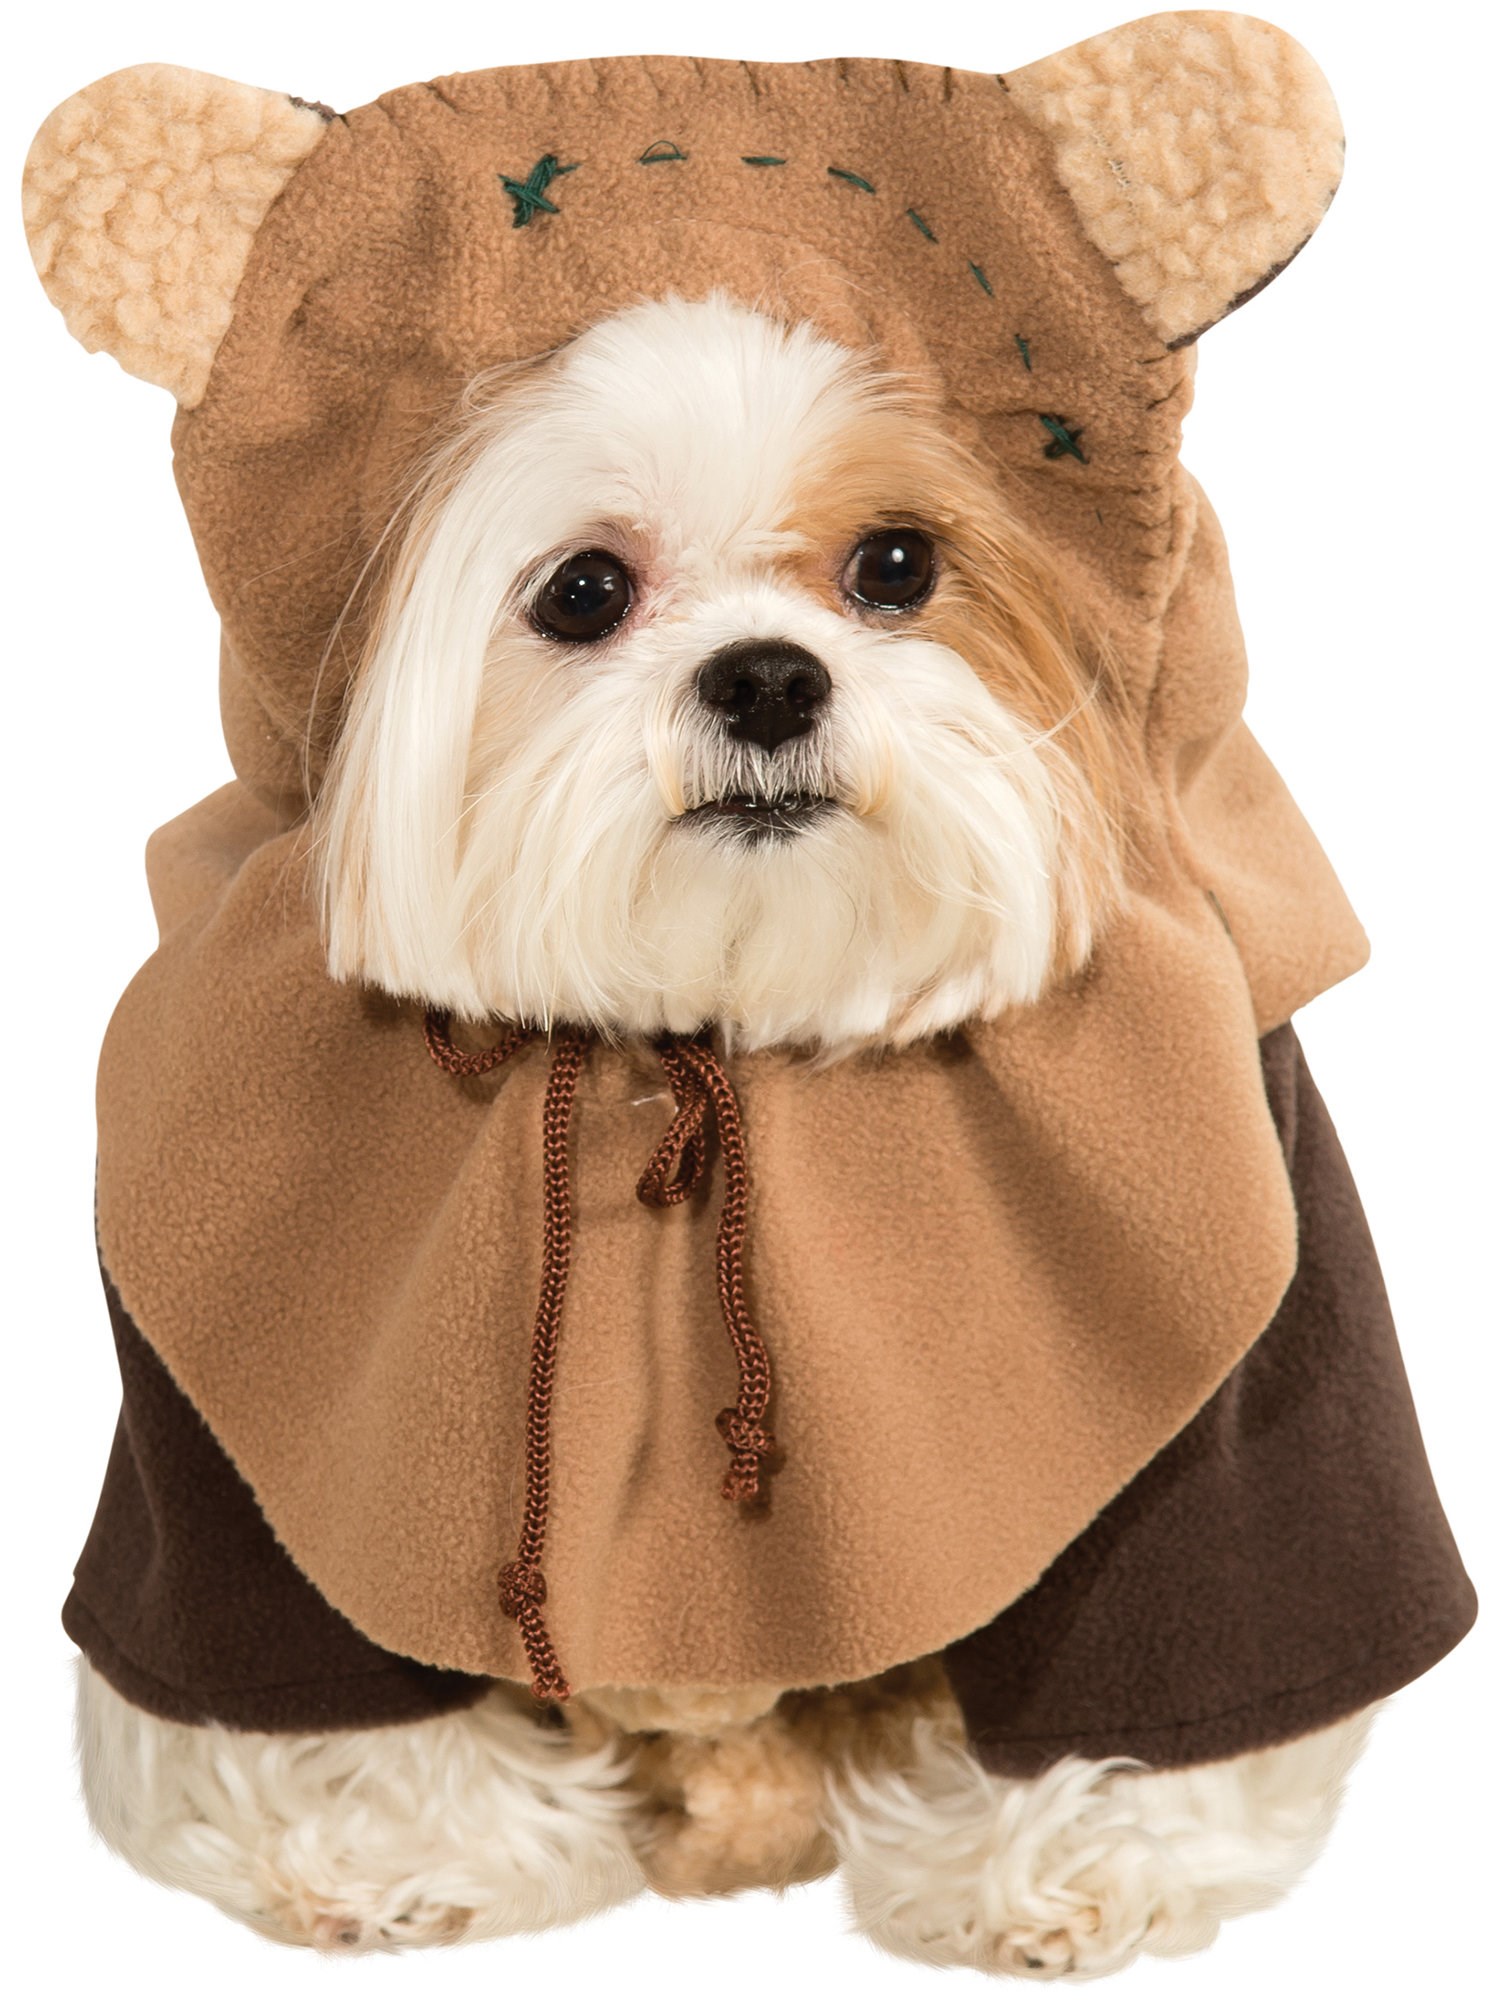 Star Wars – Ewok Dog Costume